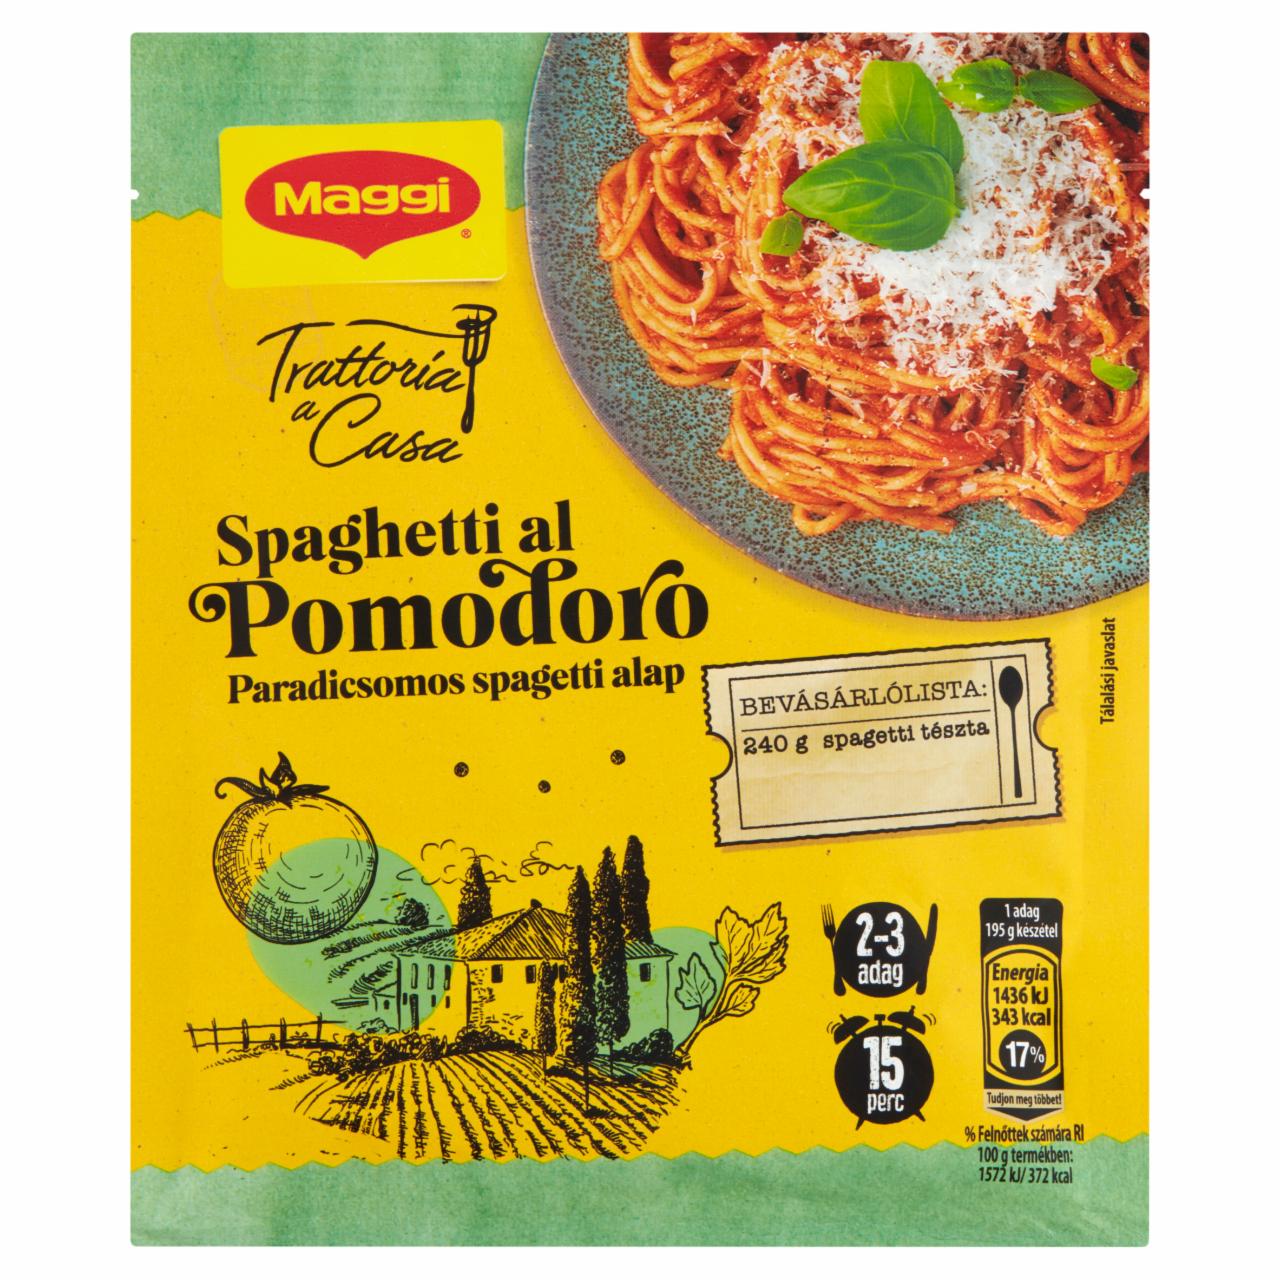 Képek - Maggi Trattoria a Casa Paradicsomos spagetti alap 46 g